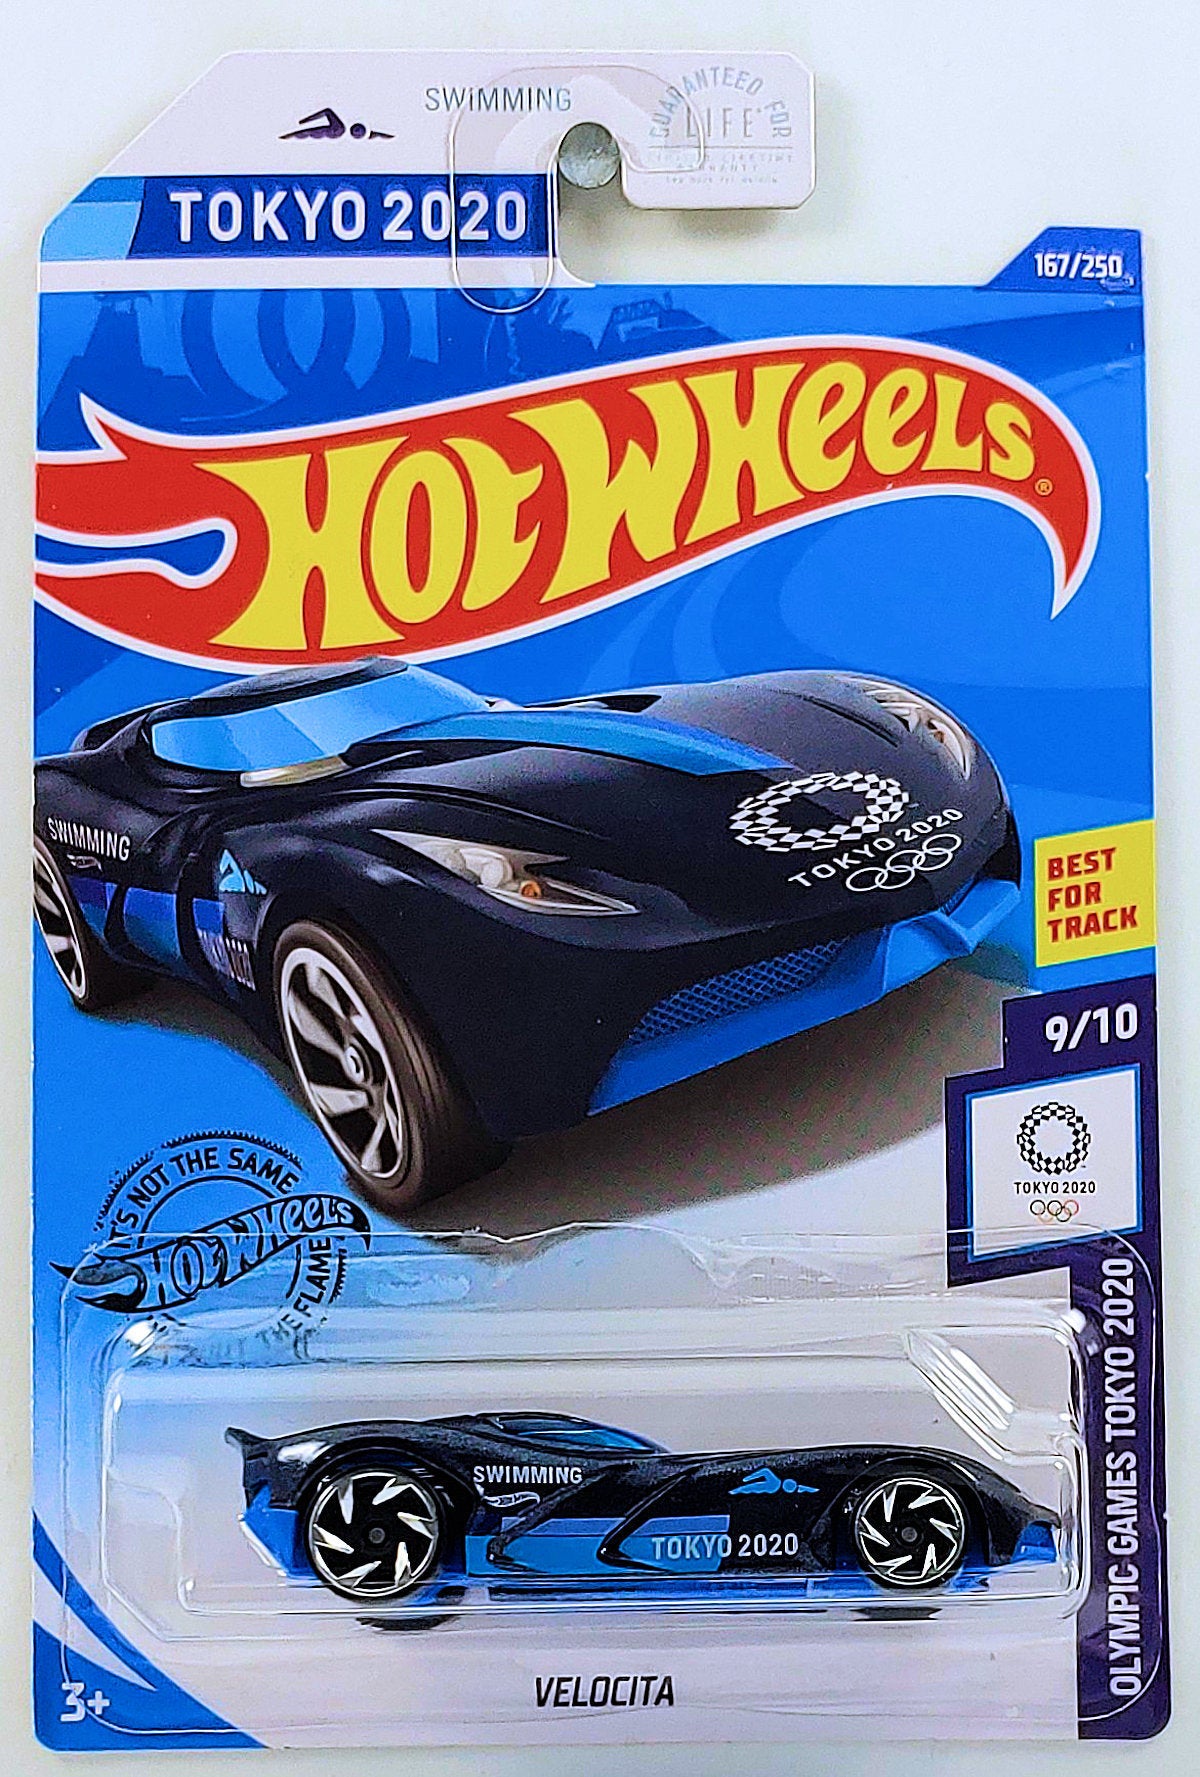 Hot Wheels 2020 - Collector # 167/250 - Olympic Games Tokyo 2020 9/10 - Velocita - Metalflake Midnight Blue